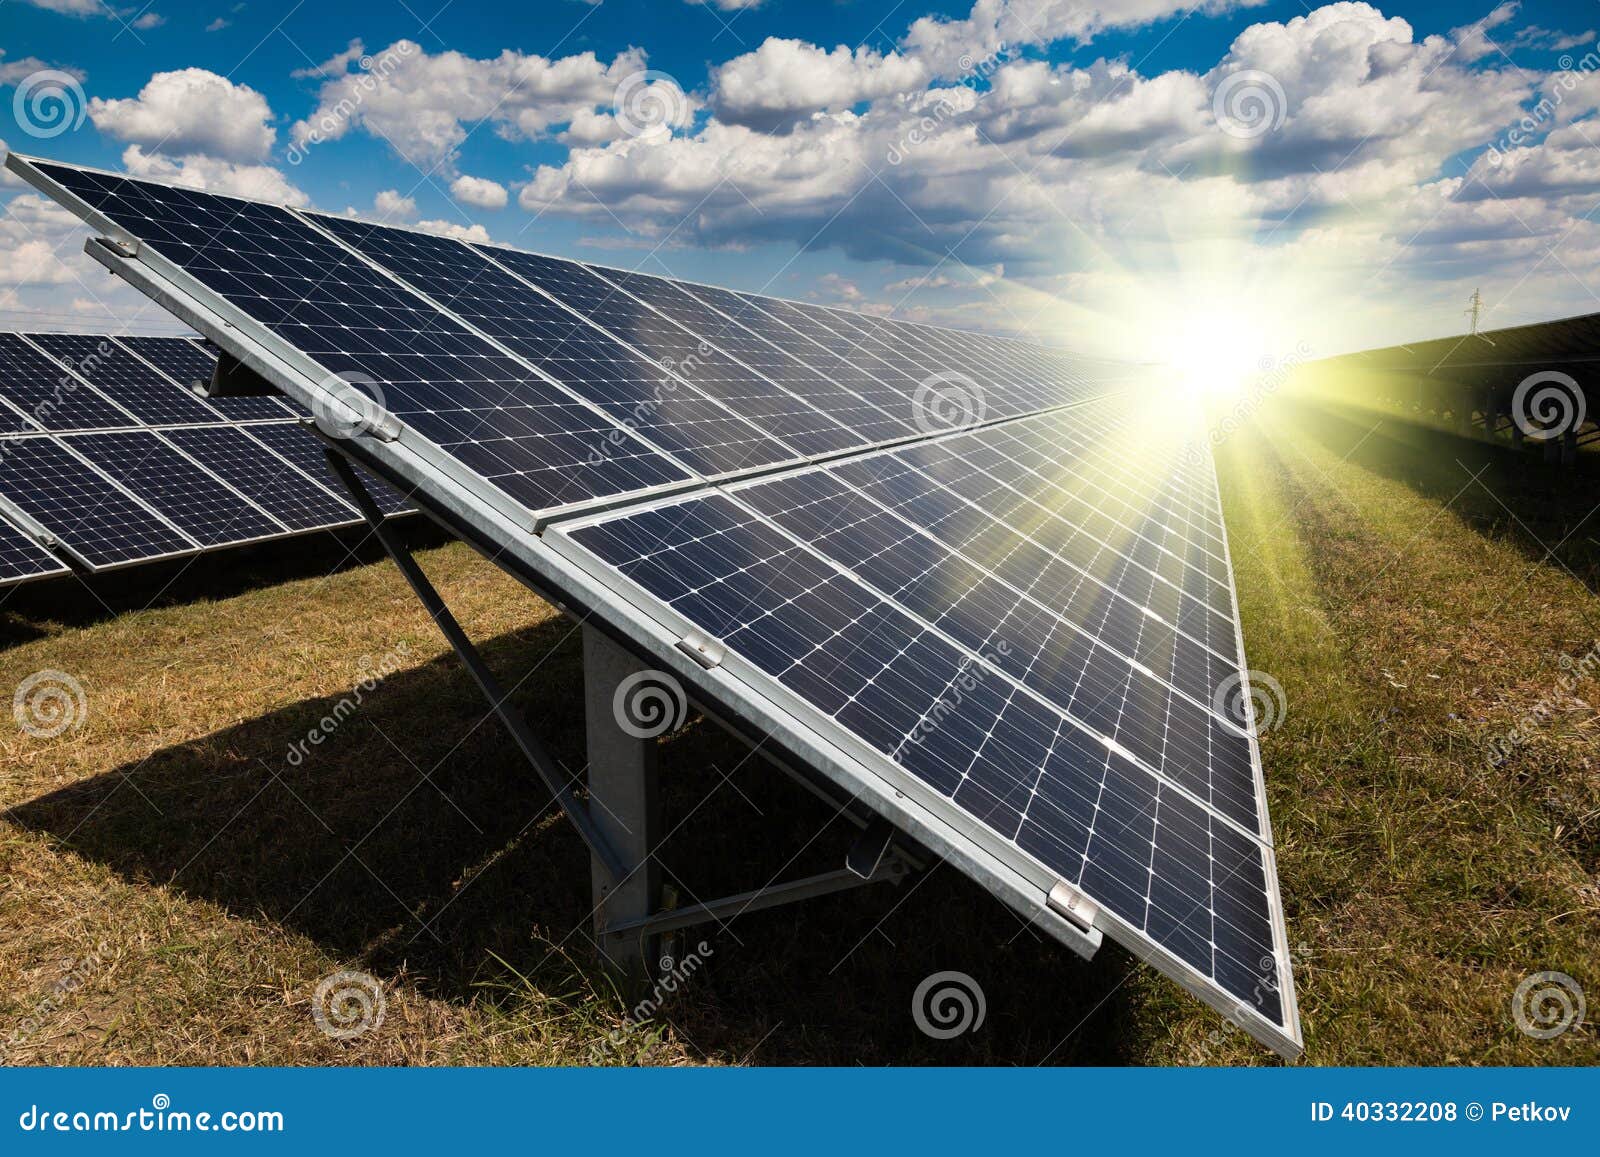 power plant using renewable solar energy